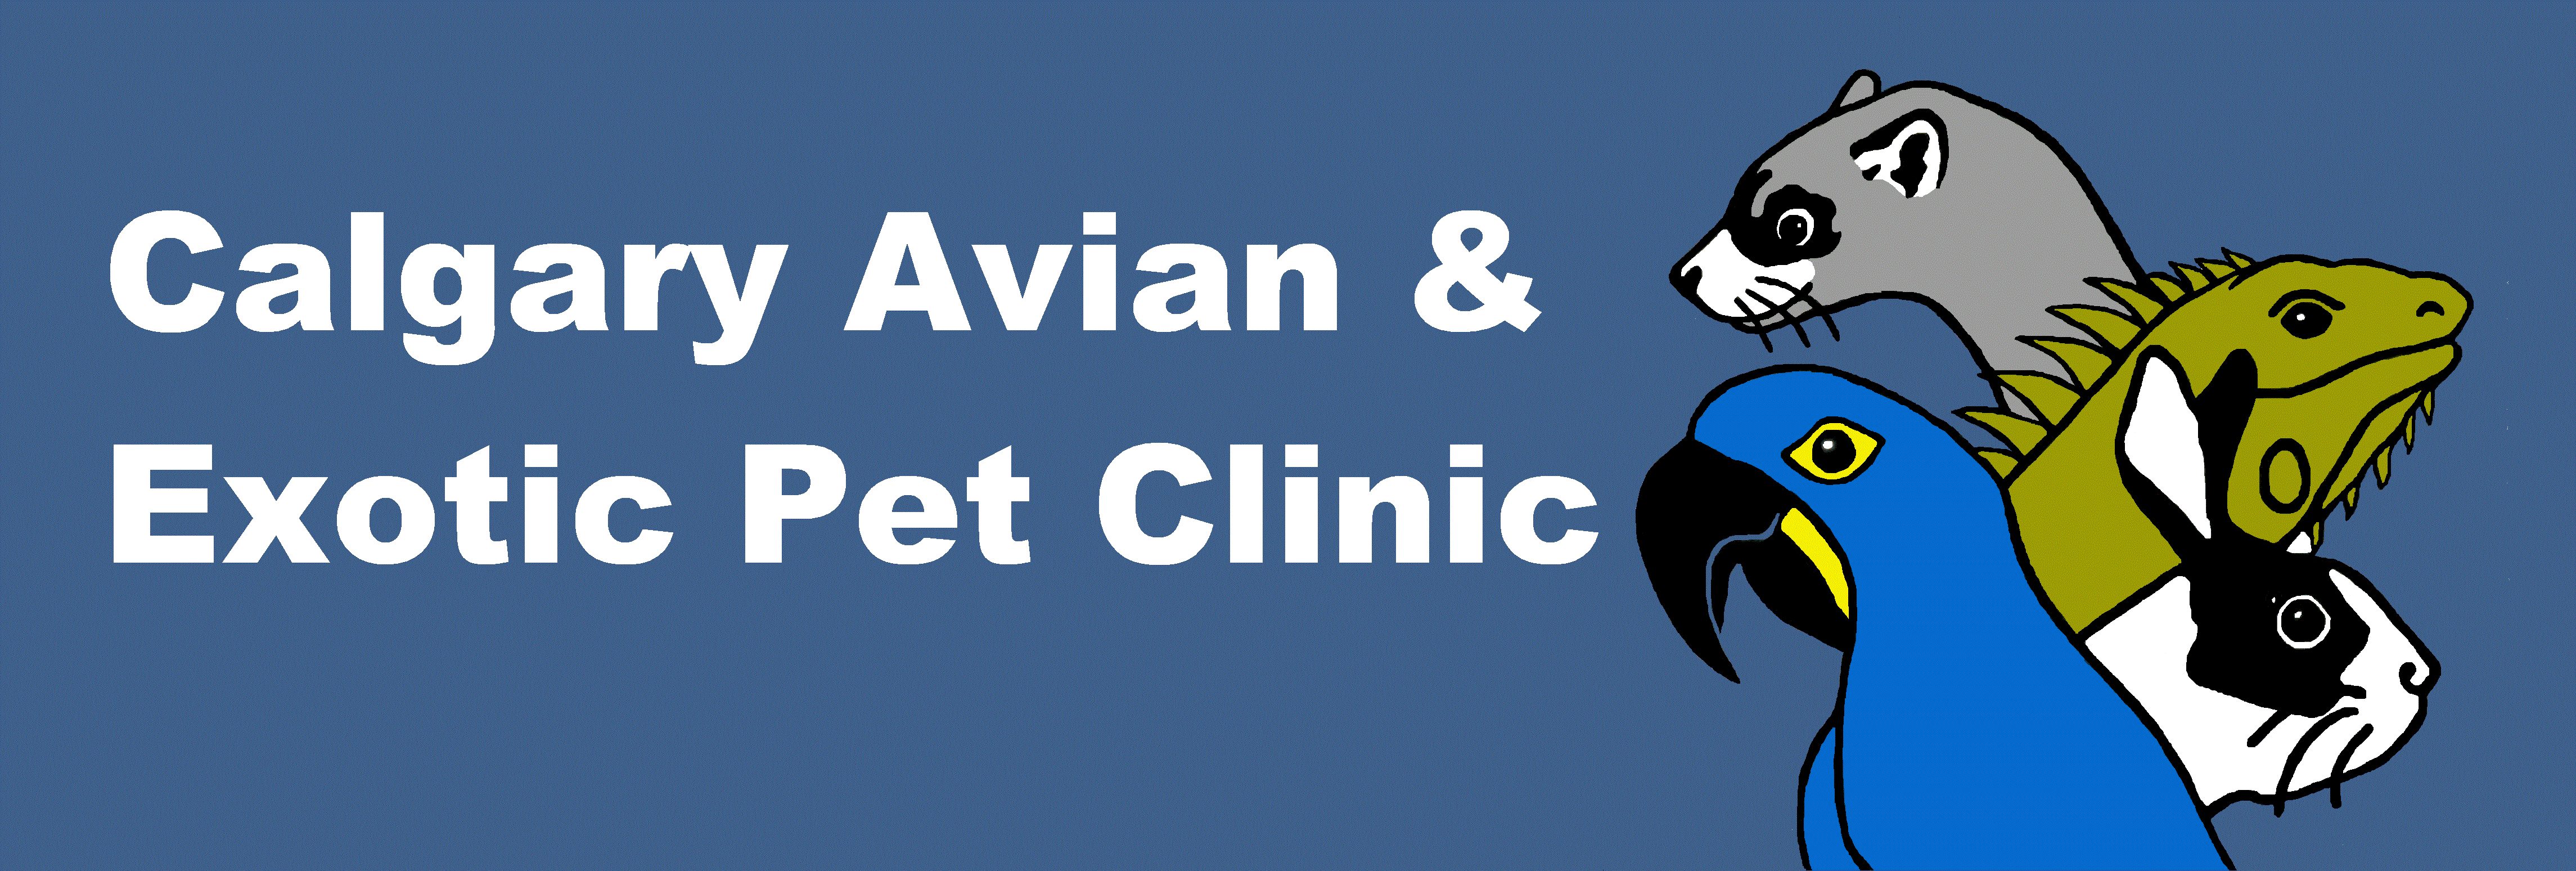 Calgary Avian & Exotic Pet Clinic - Home